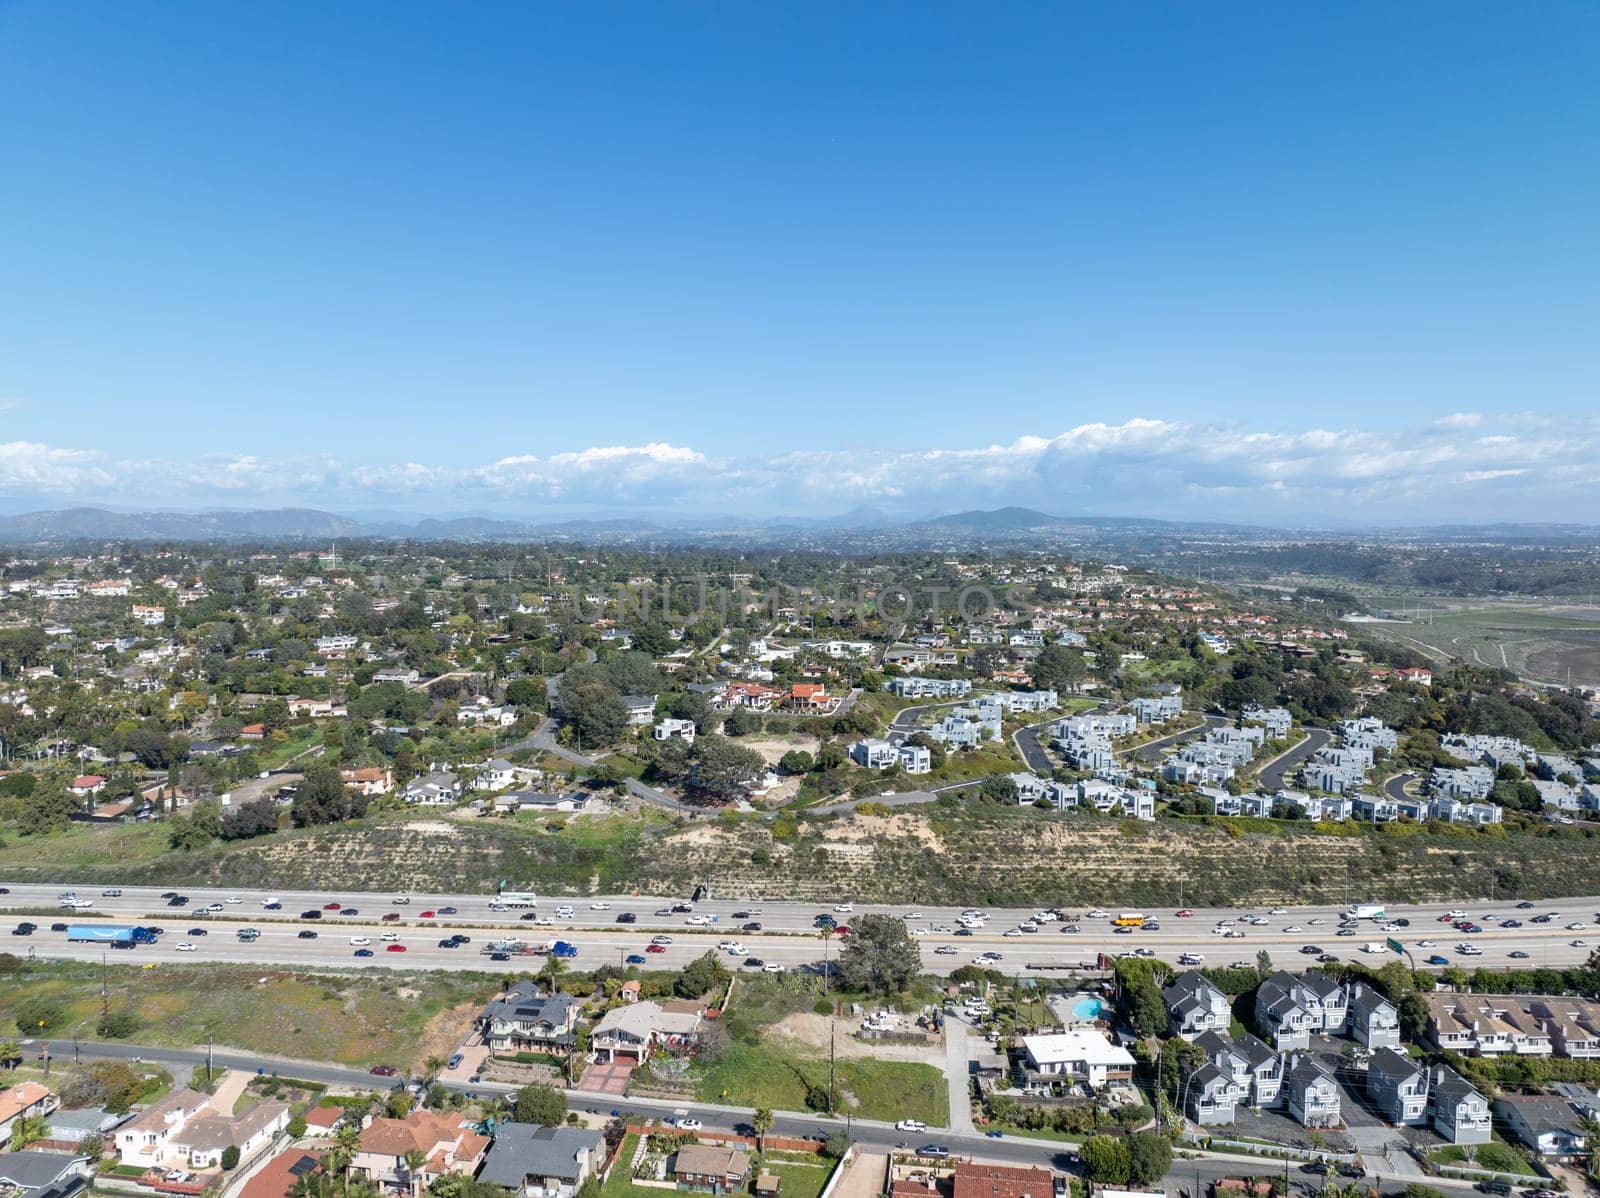 Aerial view of highway interchange and junction, San Diego Freeway interstate 5, California by Bonandbon